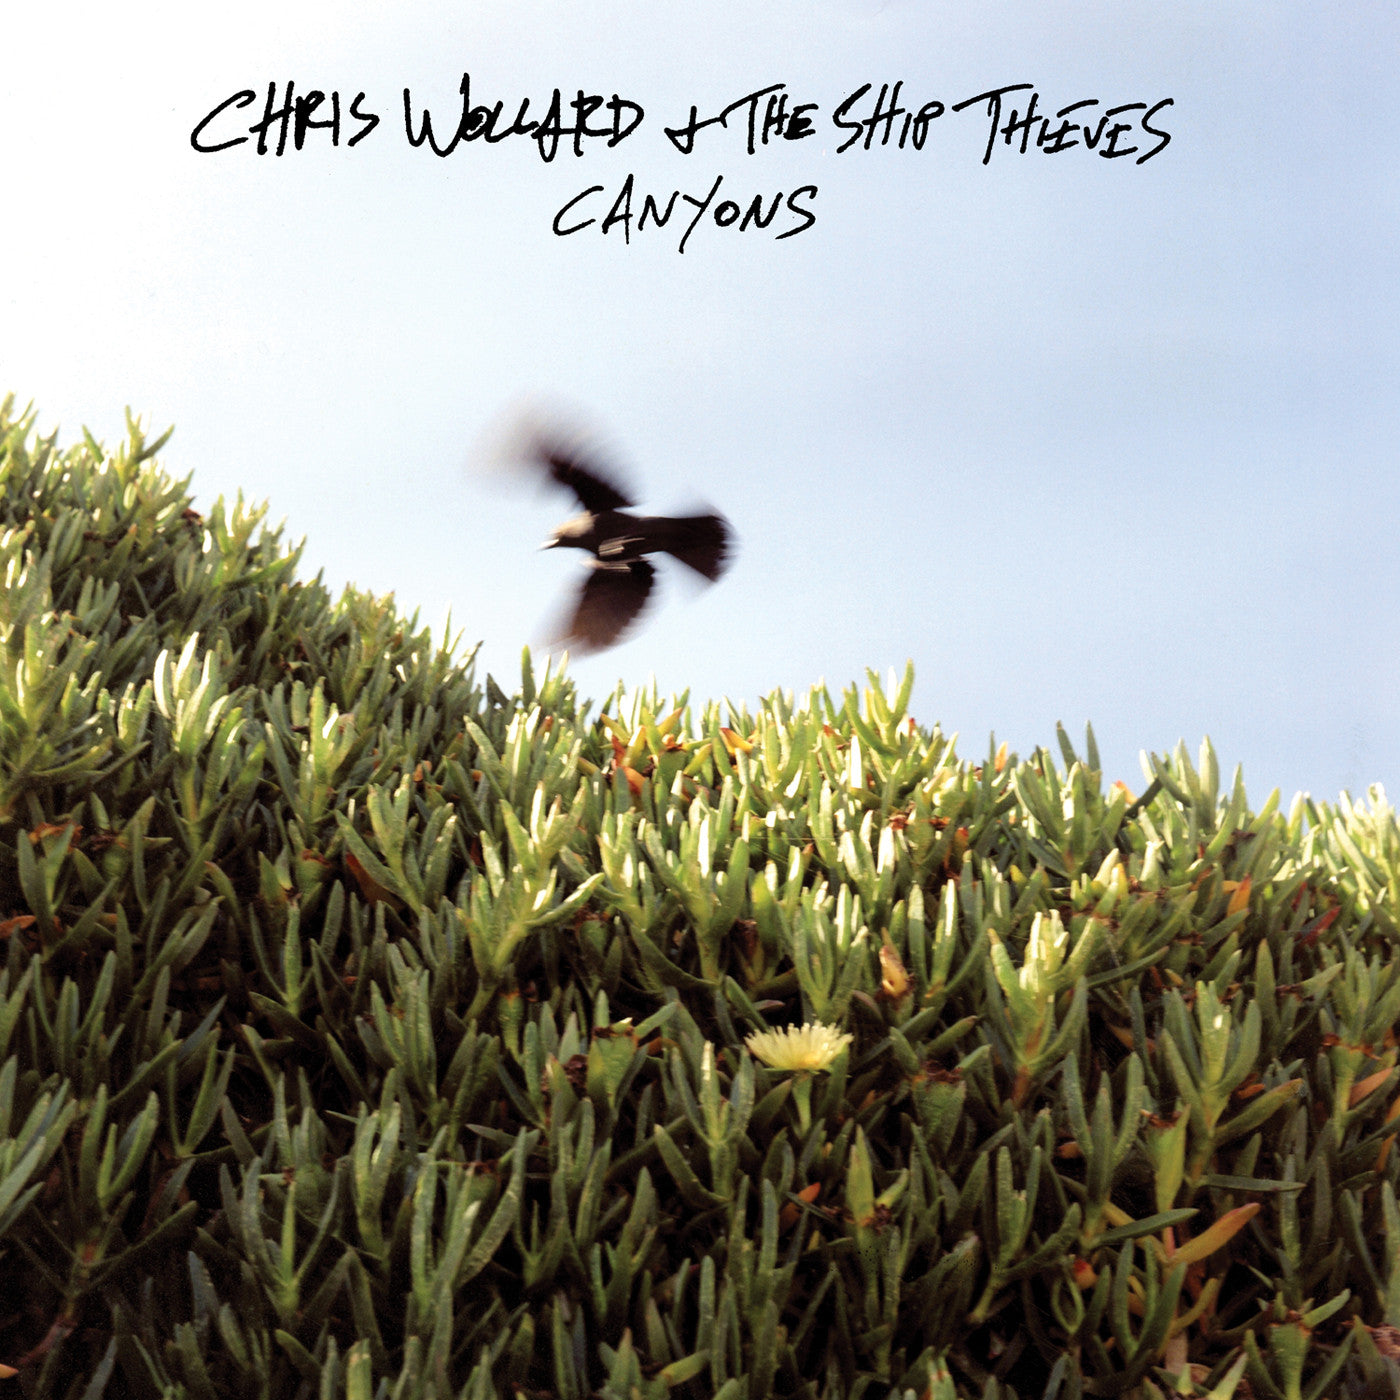 CHRIS WOLLARD & THE SHIP THIEVES "Canyons"